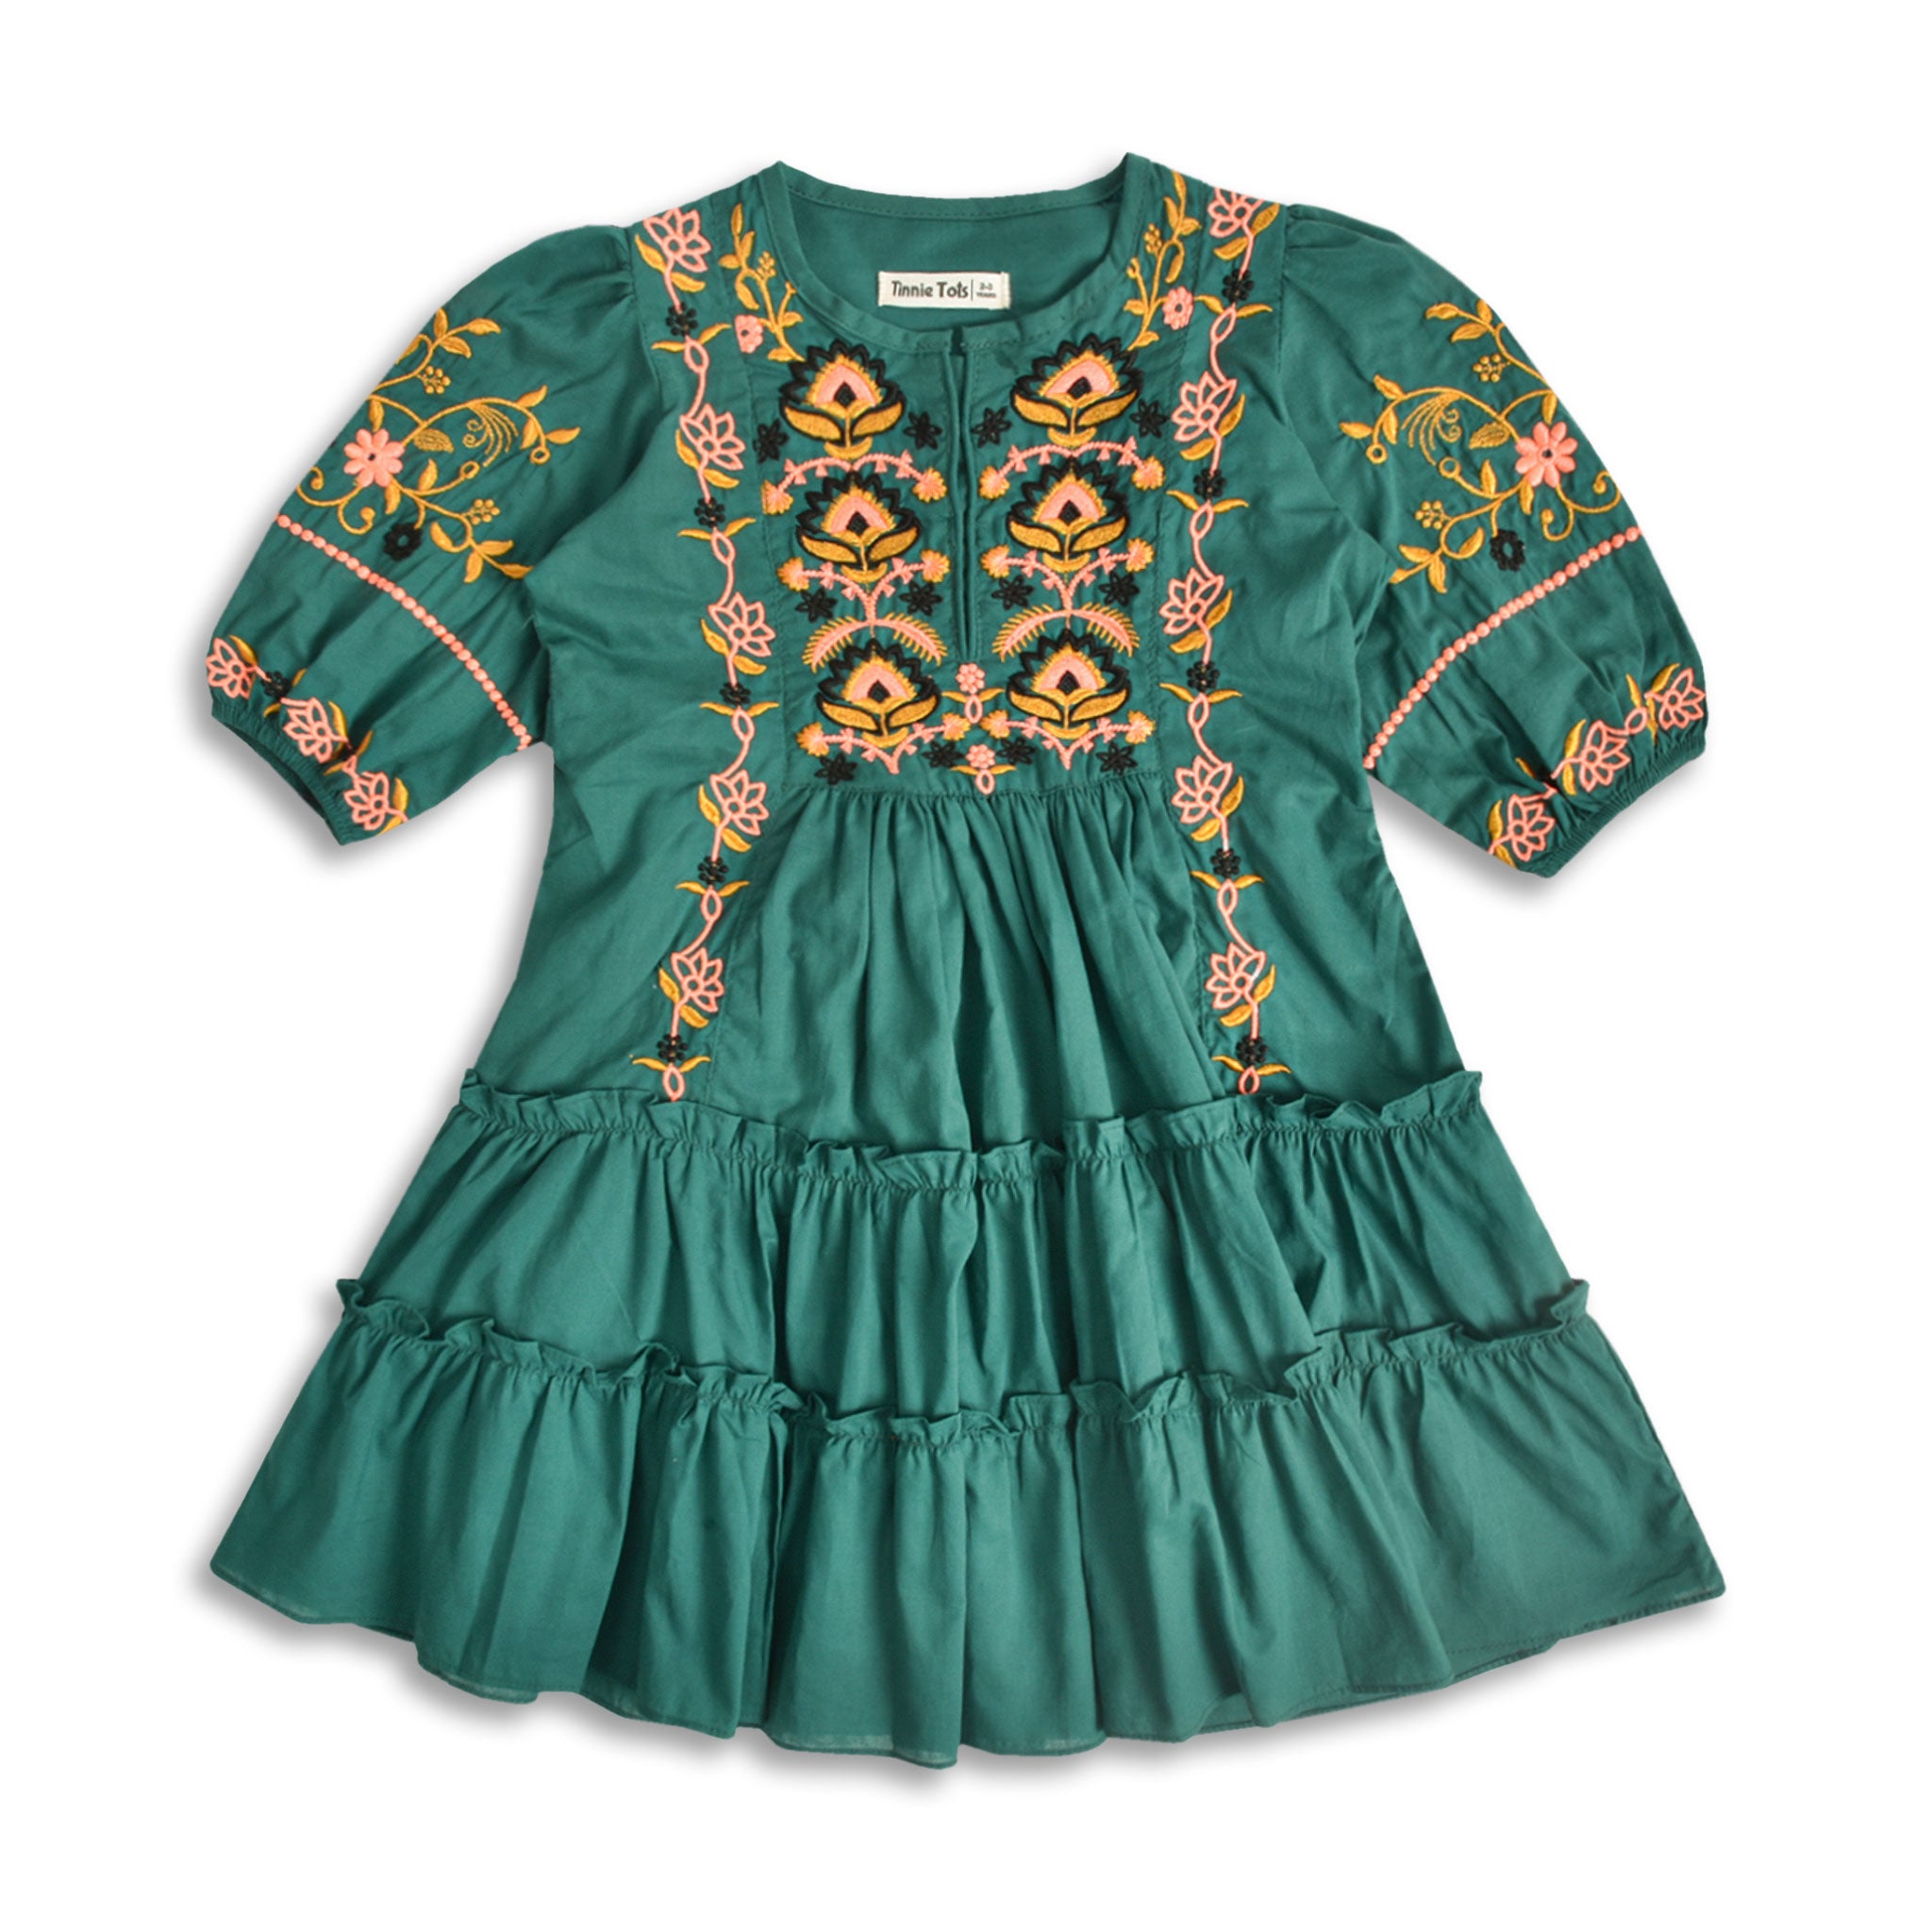 Green Ethnic Dress